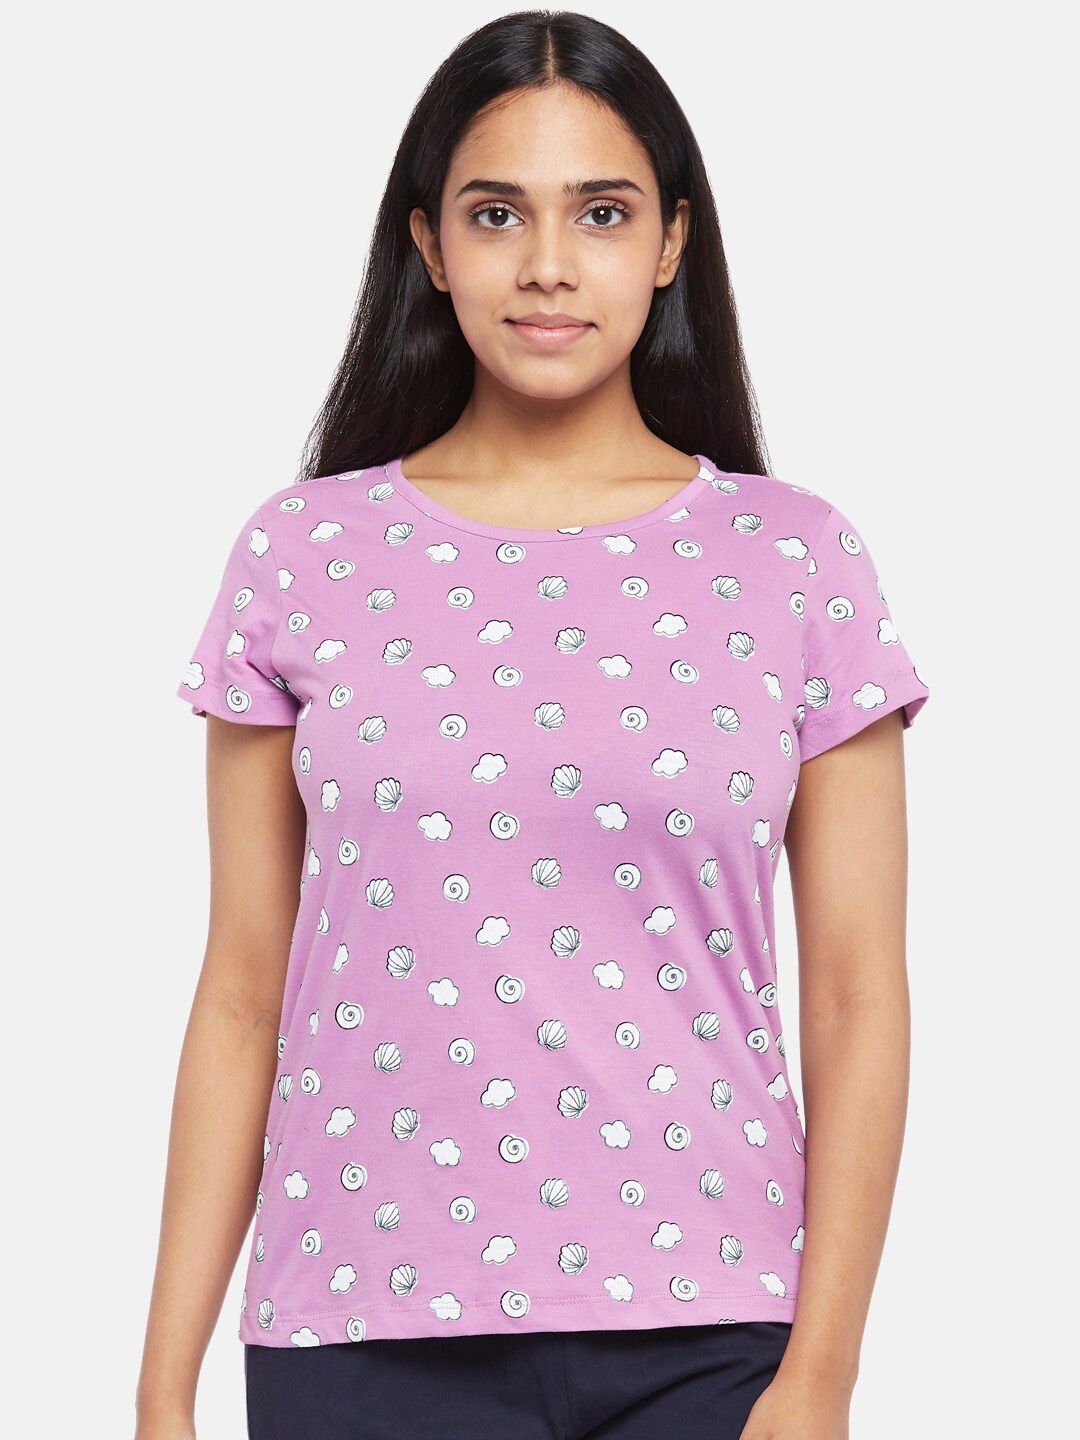 Dreamz by Pantaloons Purple Conversational Printed Regular Lounge tshirt Price in India